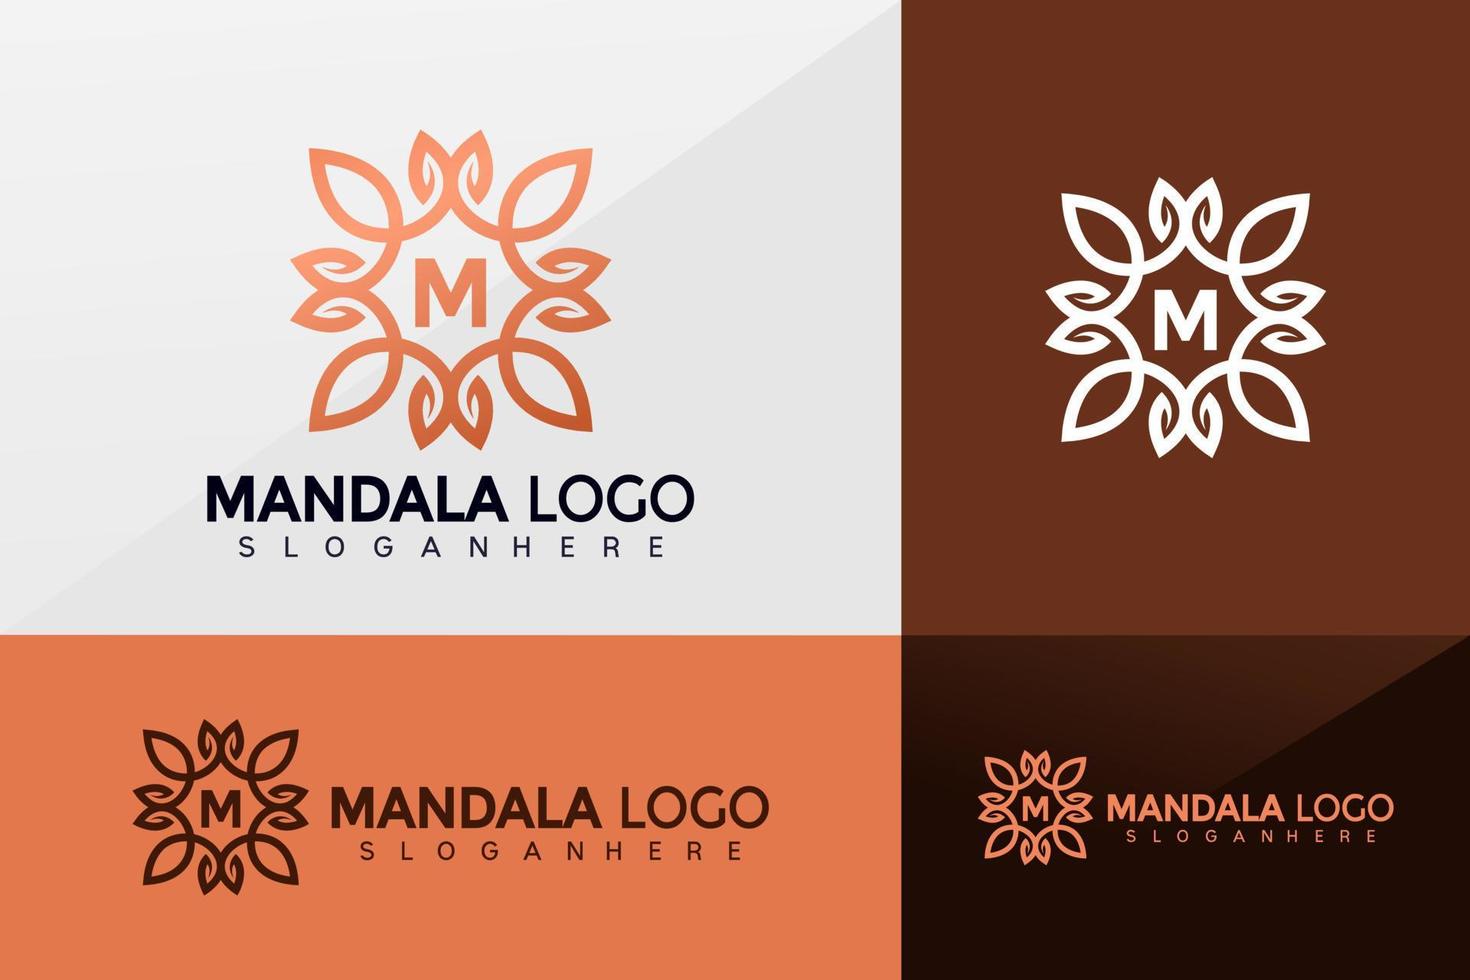 eerste letter m mandala logo vector, minimaliset elegante bloem logo ontwerp, modern logo, logo ontwerpen vector illustratie sjabloon